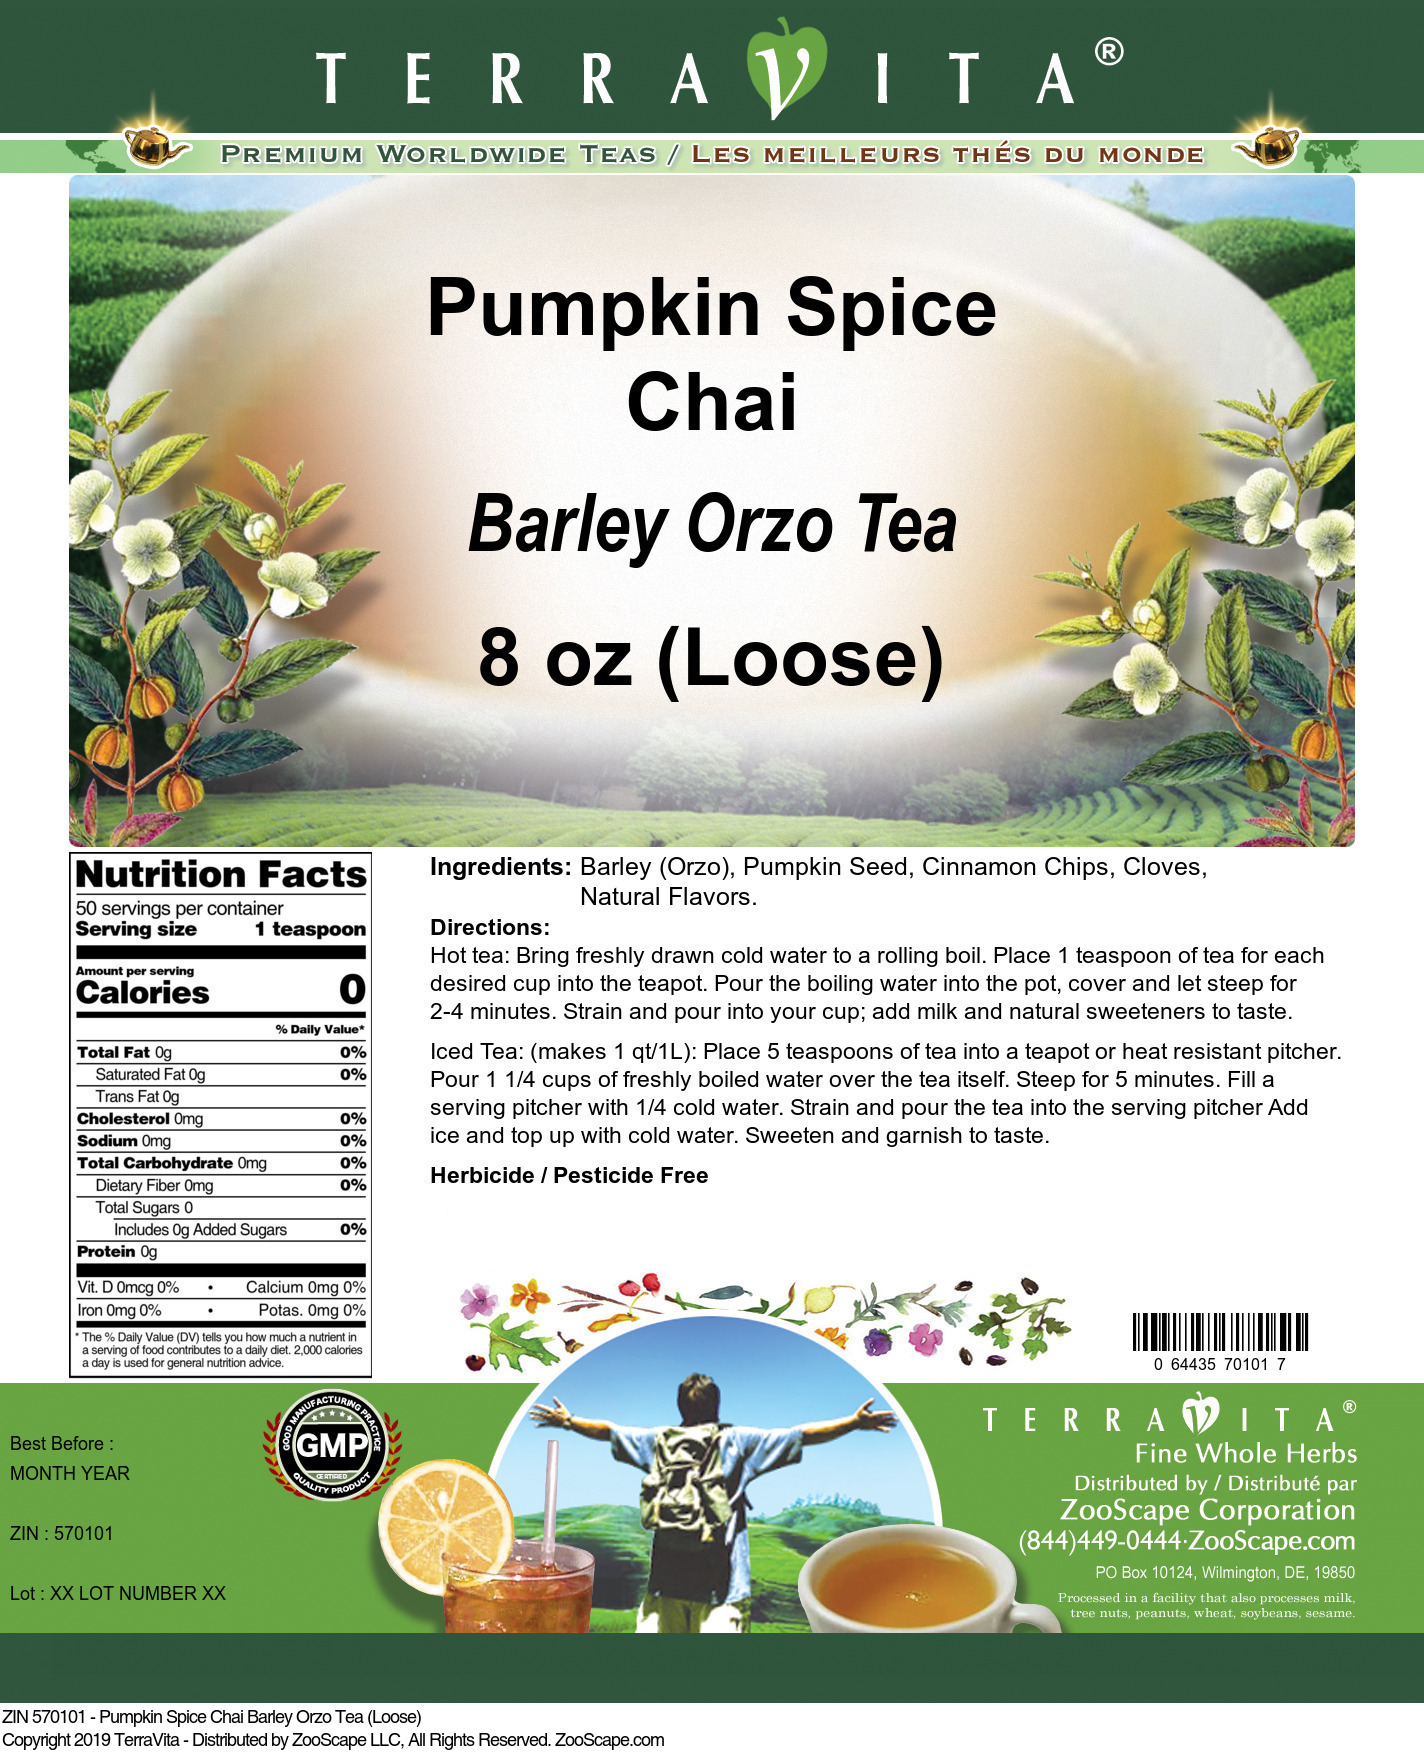 Pumpkin Spice Chai Barley Orzo Tea (Loose) - Label